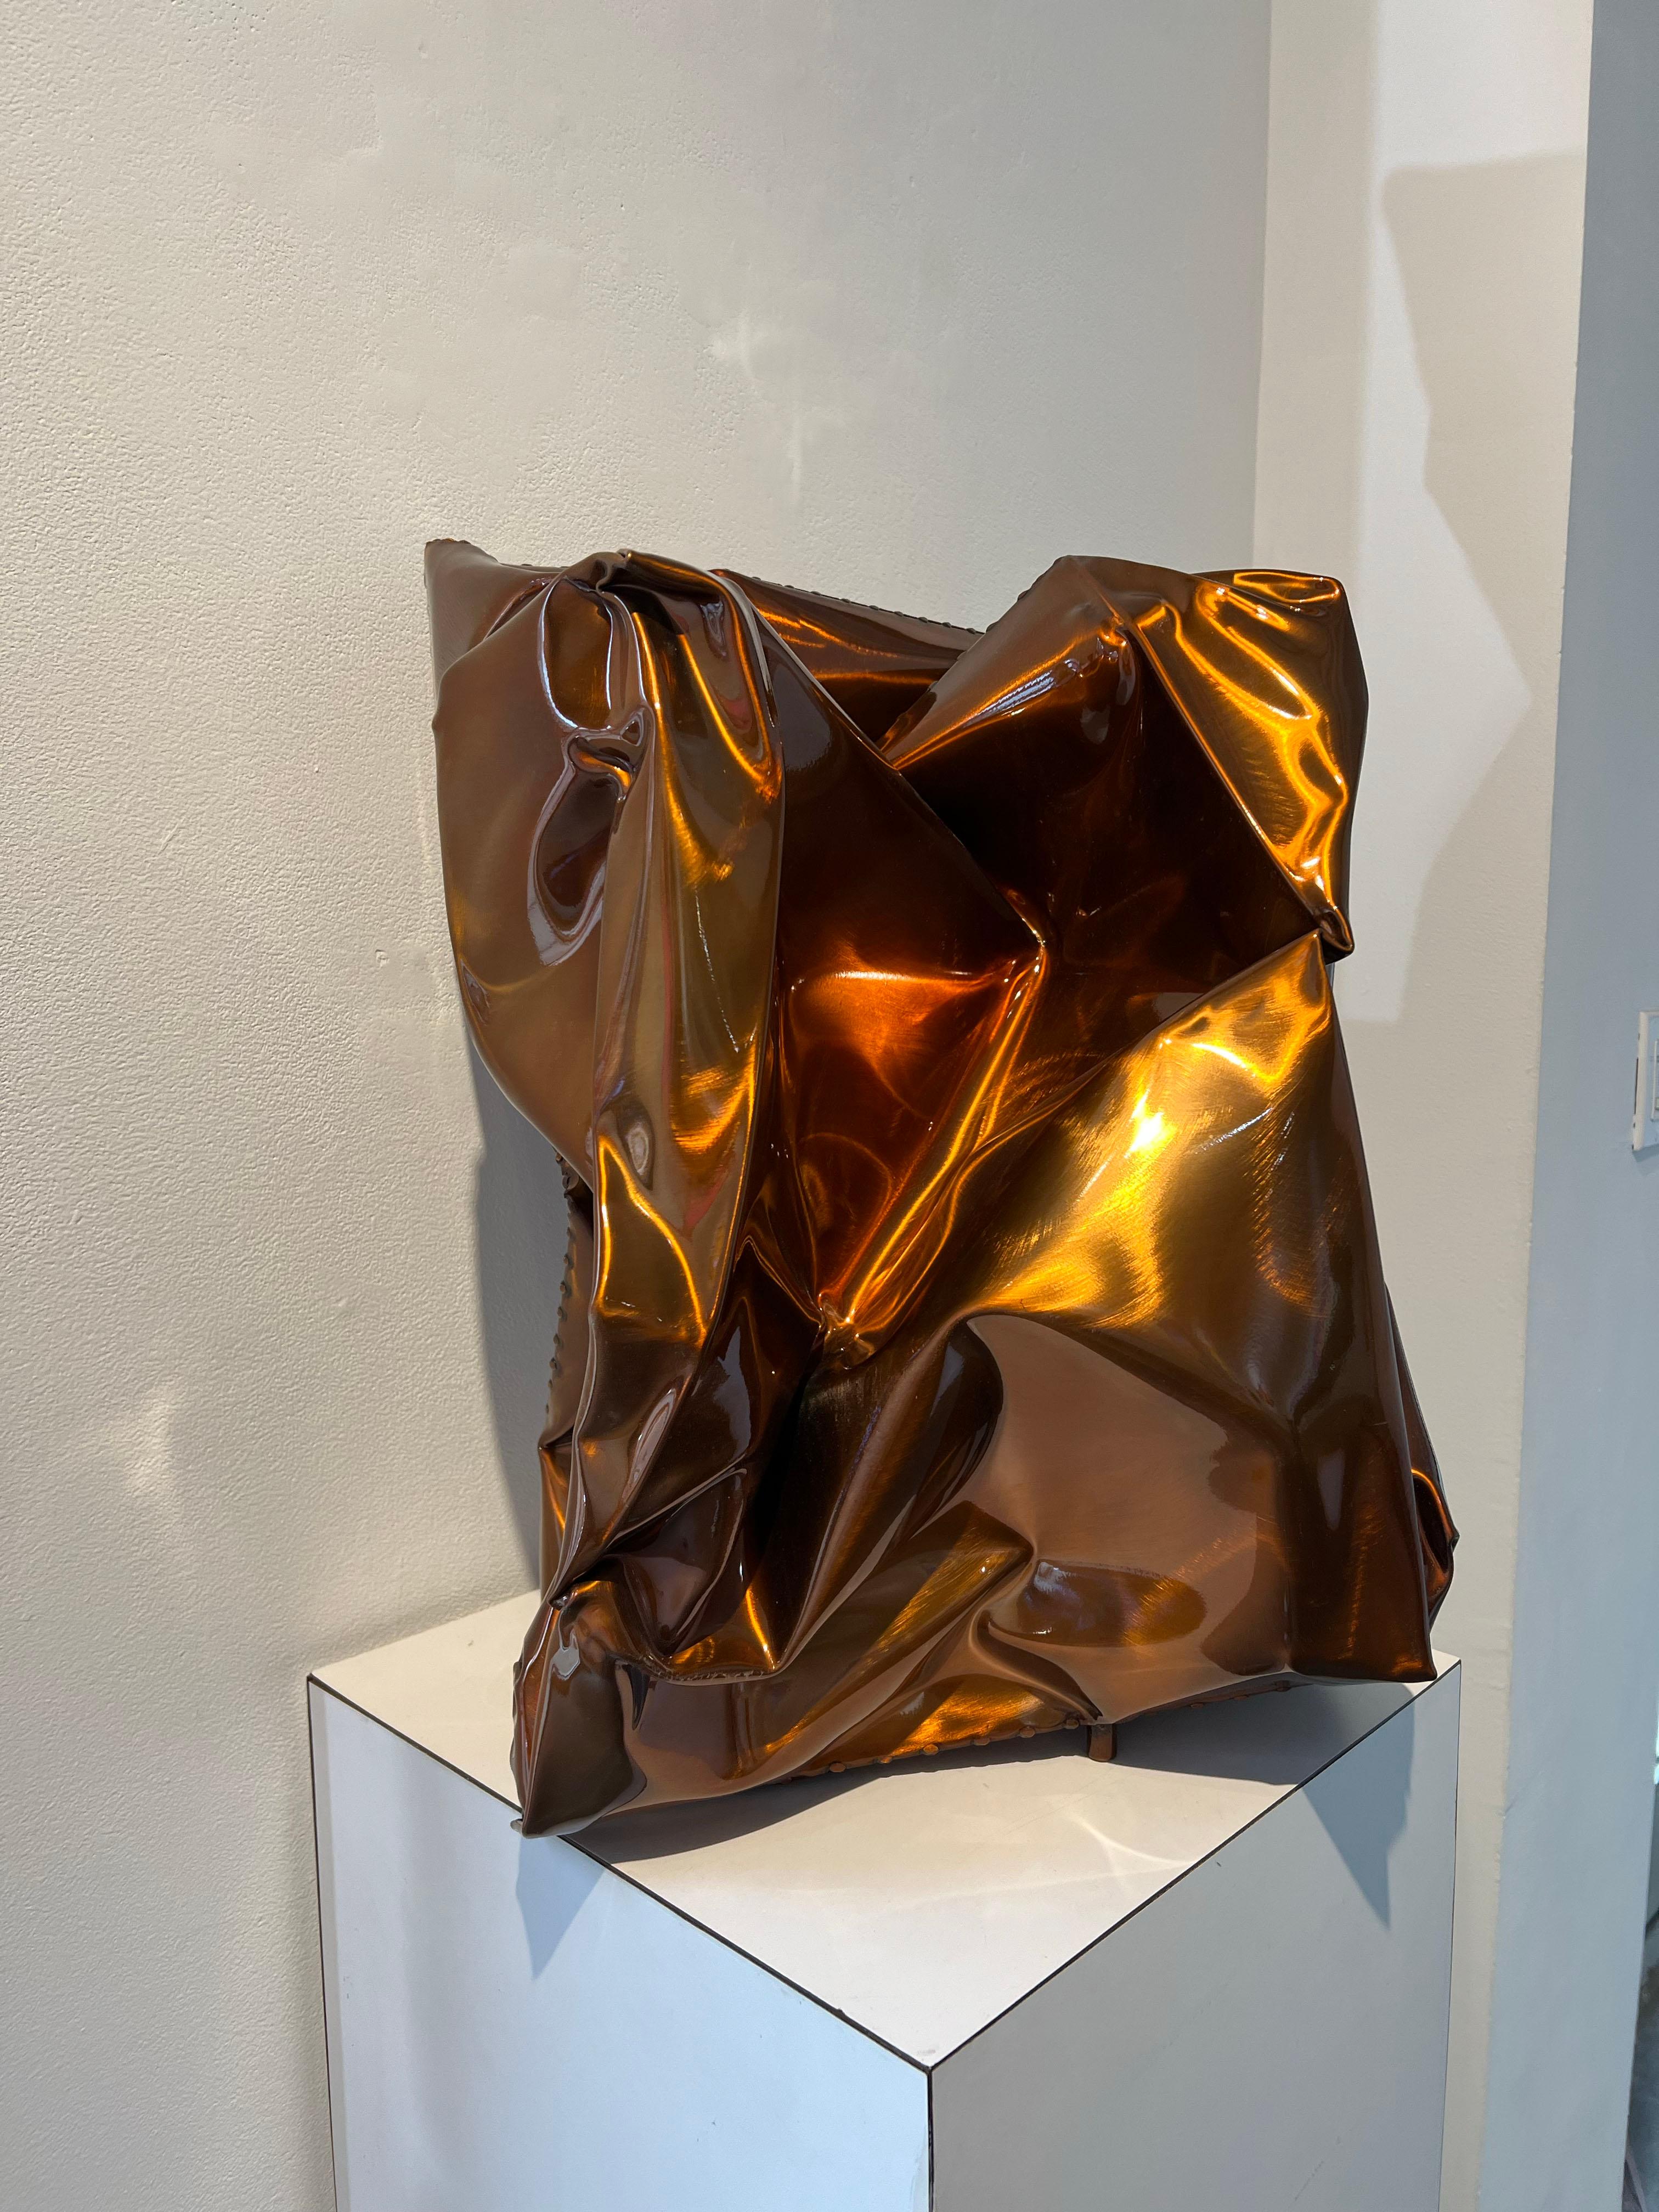 Chestnut - Beige Abstract Sculpture by Rick Lazes